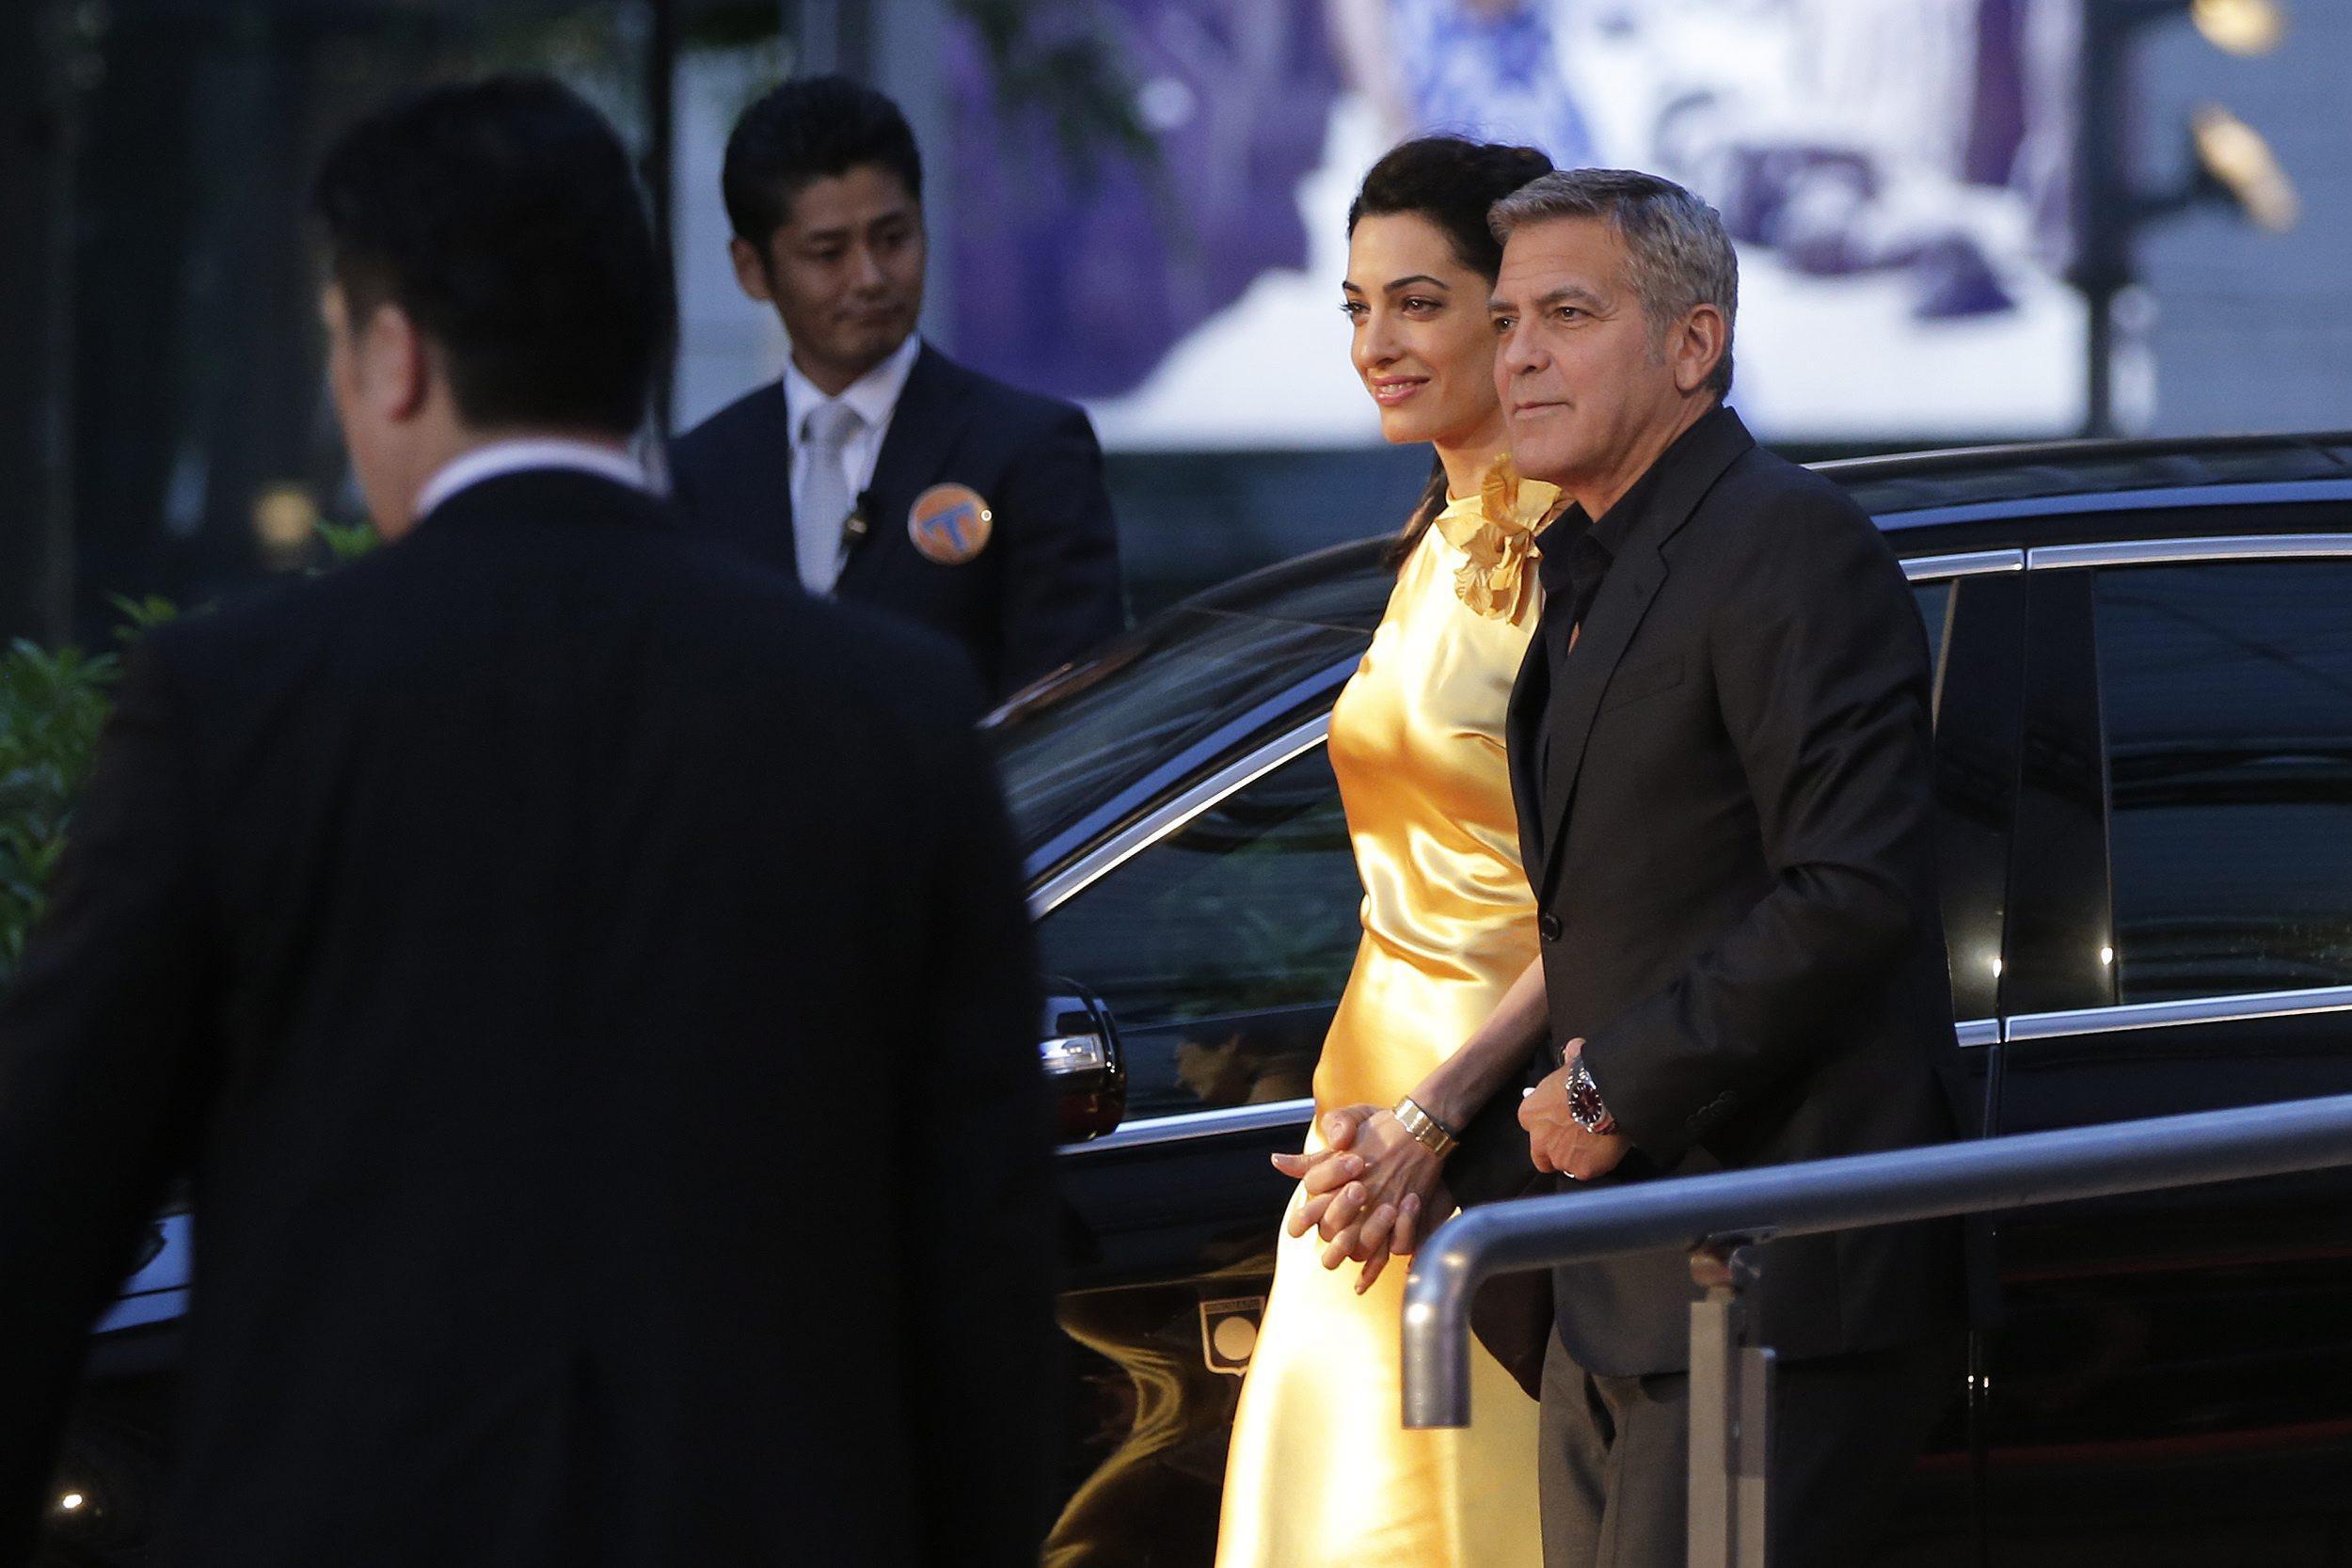 George Clooney e Amal Alamuddin a cena sul Lago di Como senza i gemelli